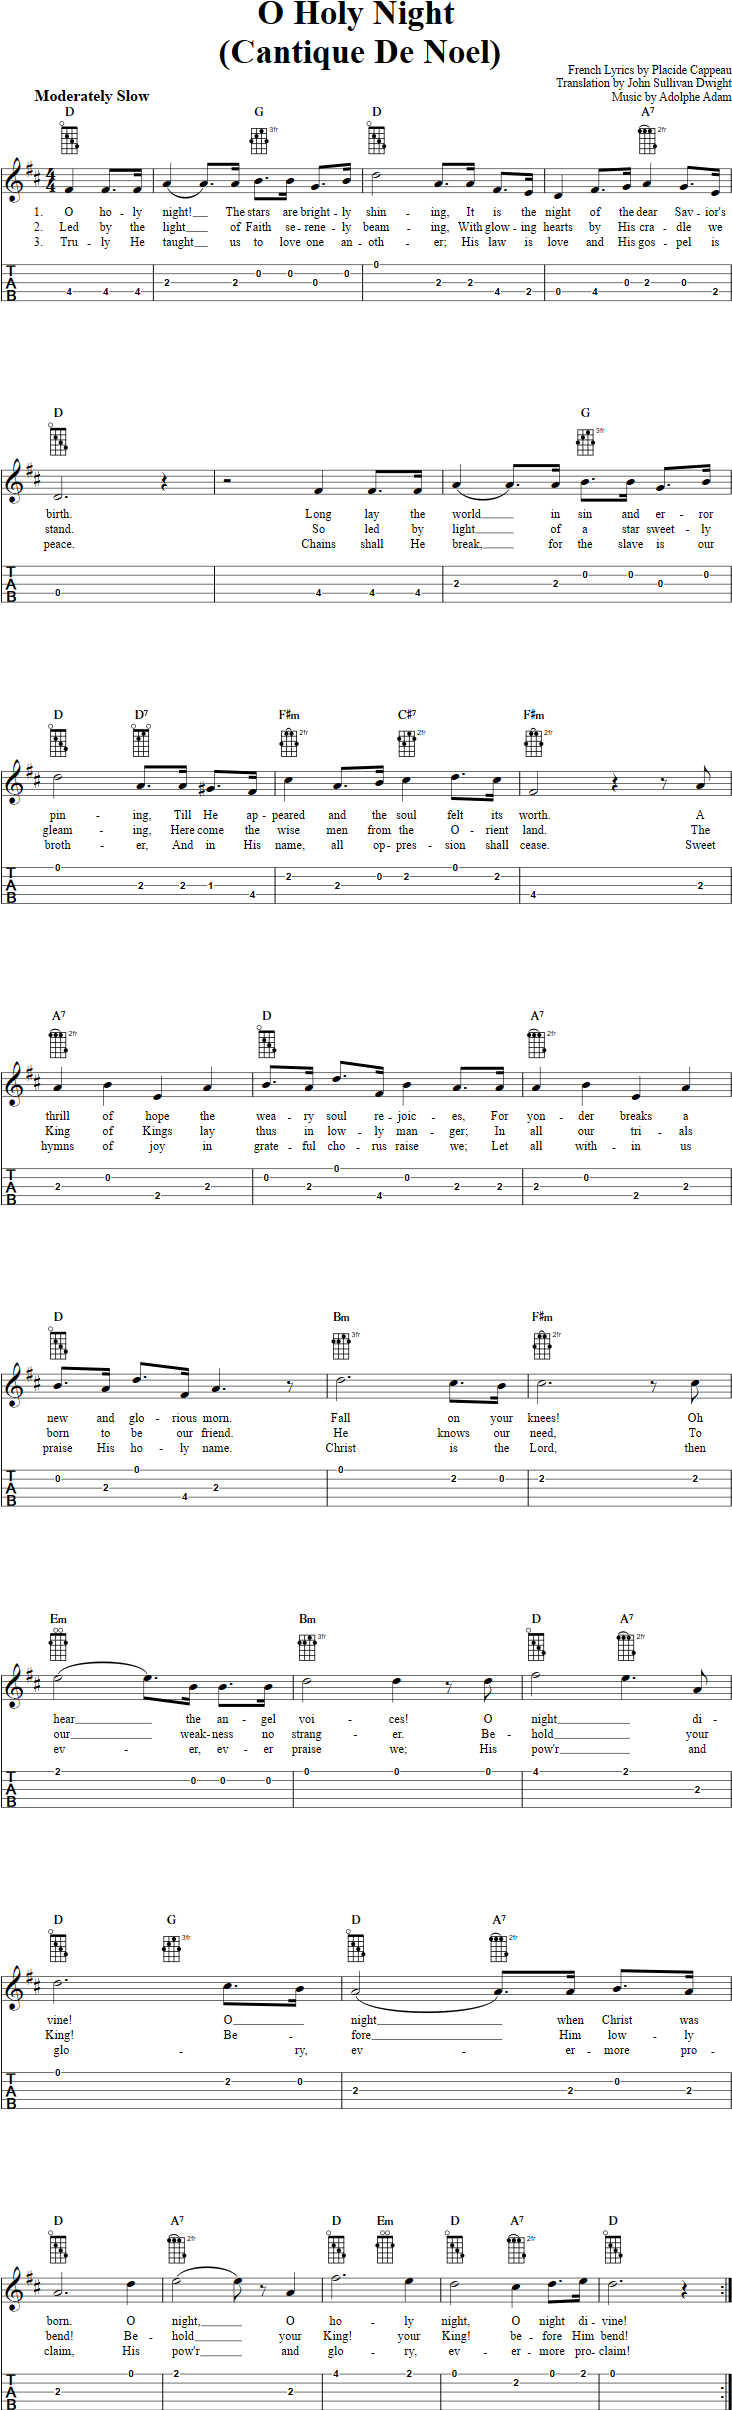 O Holy Night Chords O Holy Night Chords Sheet Music And Tab For Banjo With Lyrics